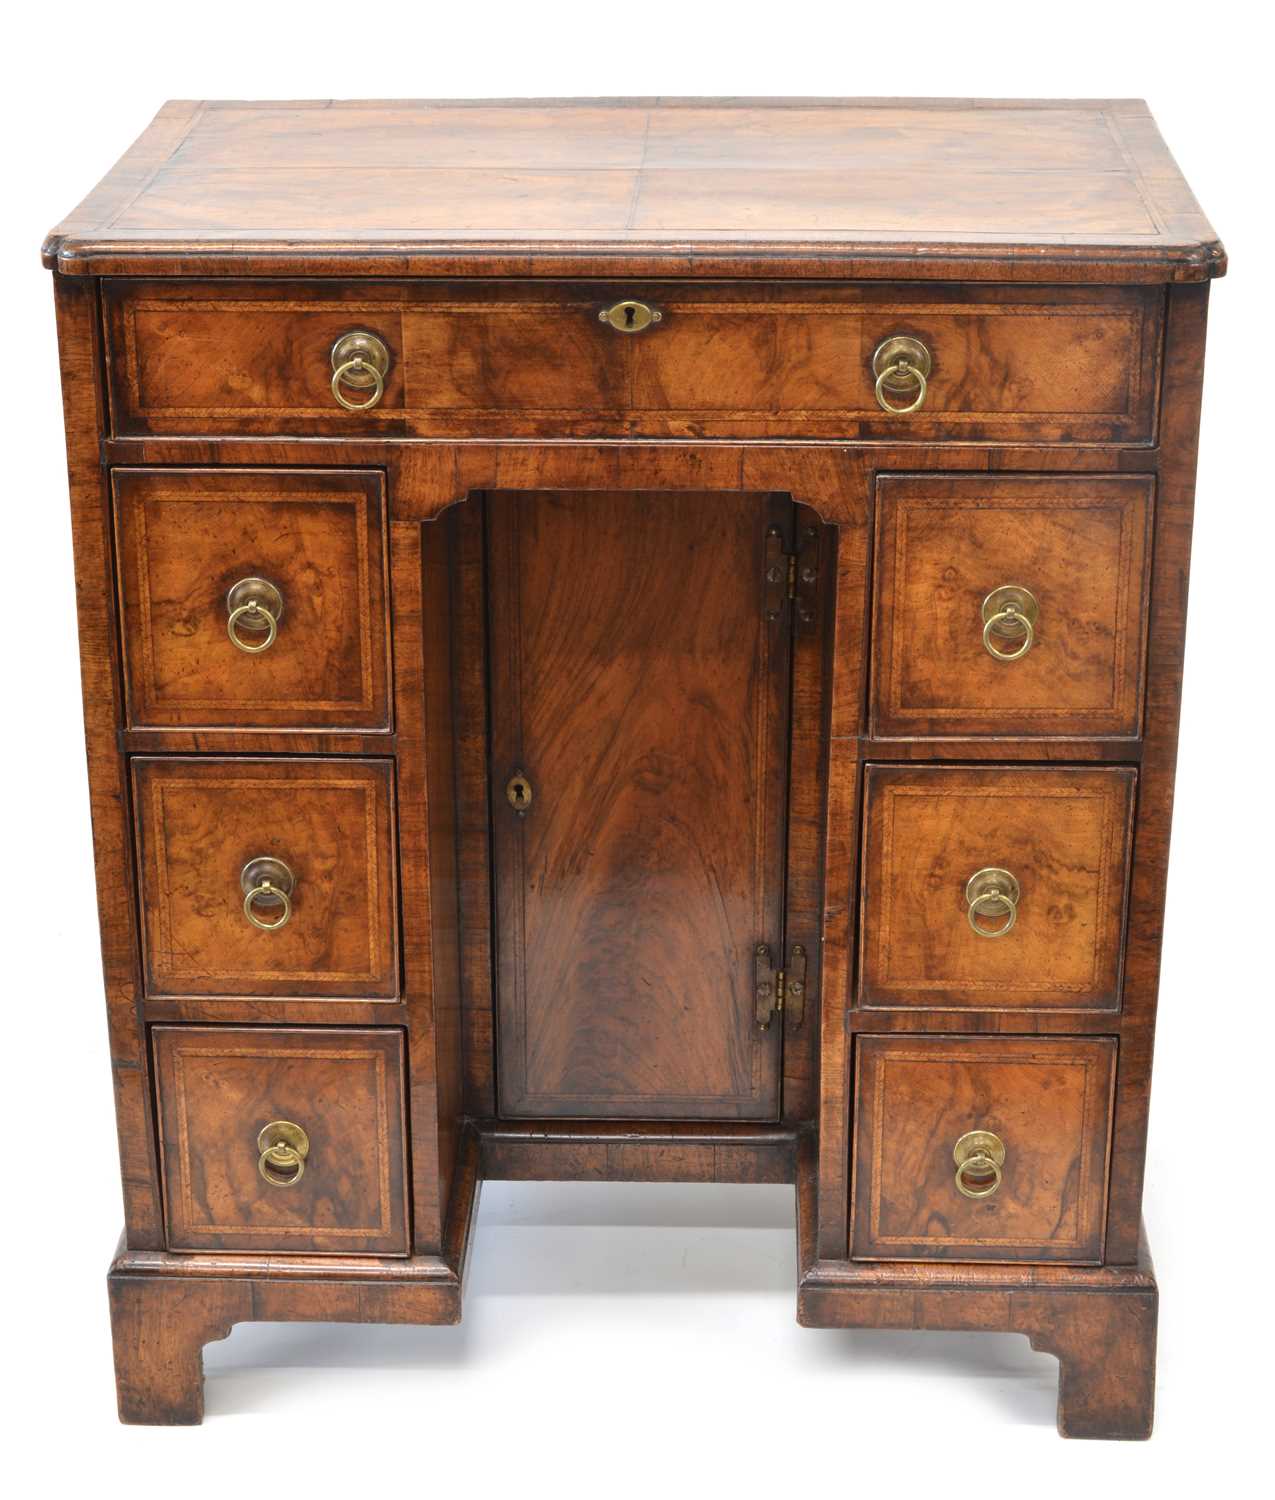 305 - George II Walnut Kneehole Desk of Small Proportions